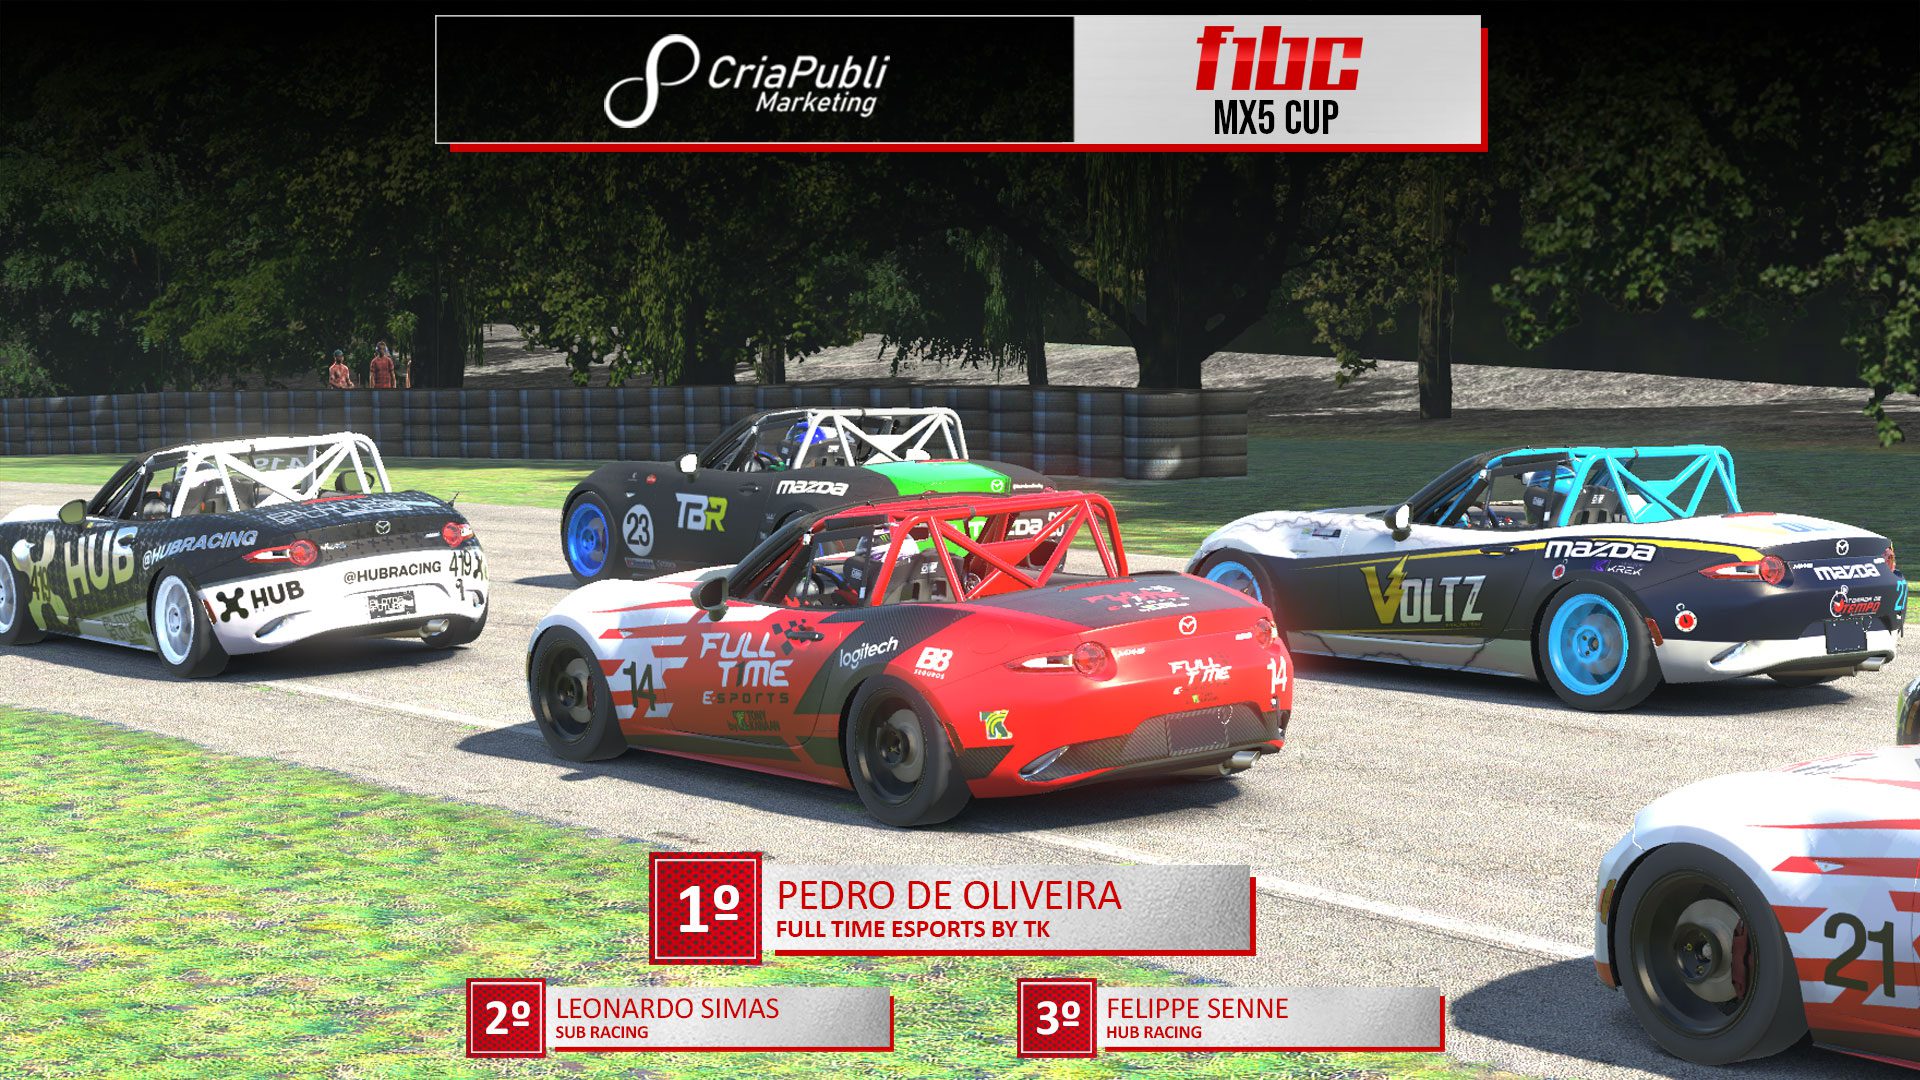 F1BC MX5 Cup: Pedro de Oliveira (Full Time) vence duas rondas impressionantes no Summit Point